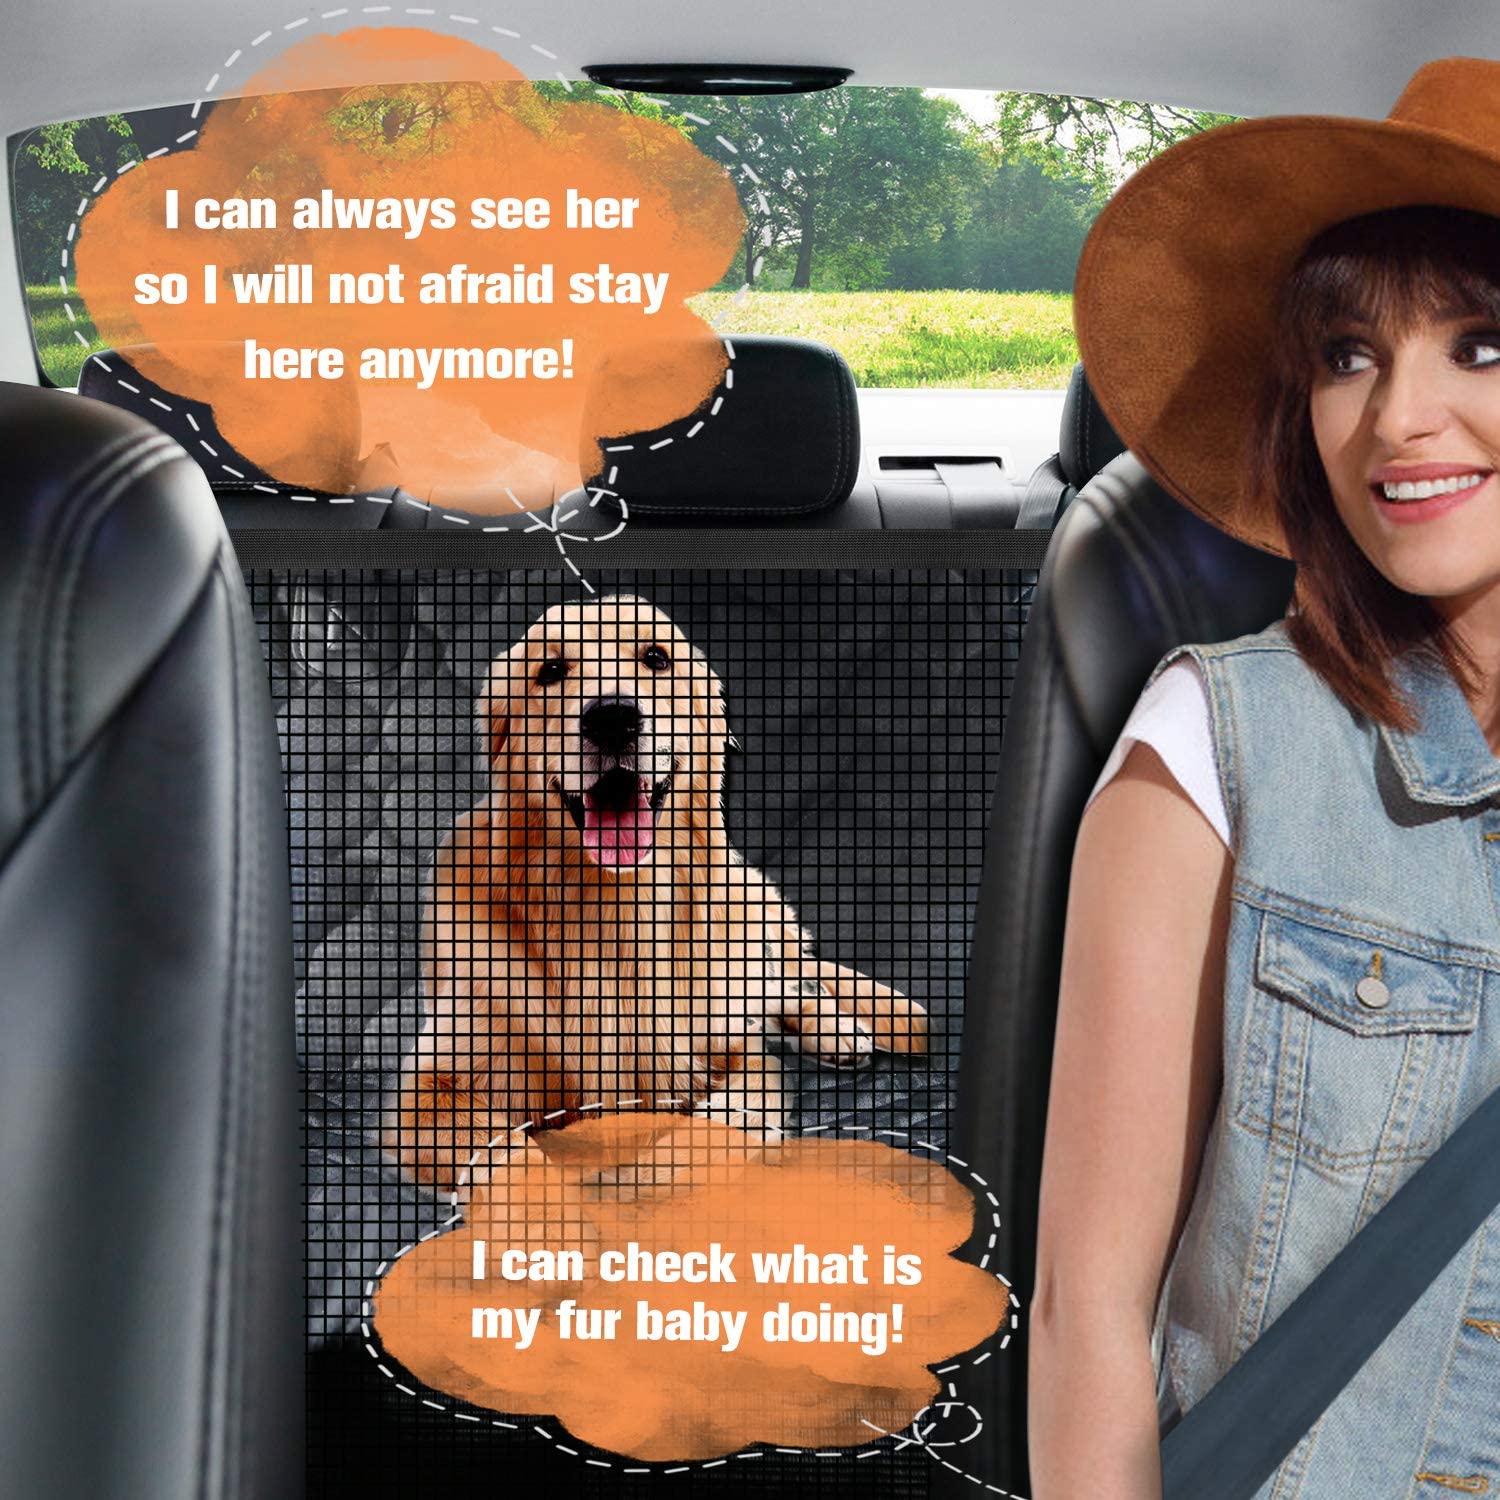 Pet Dog Rear Back Seat Cover Blanket Hammock Protector for Tesla Model 3 S  X Y